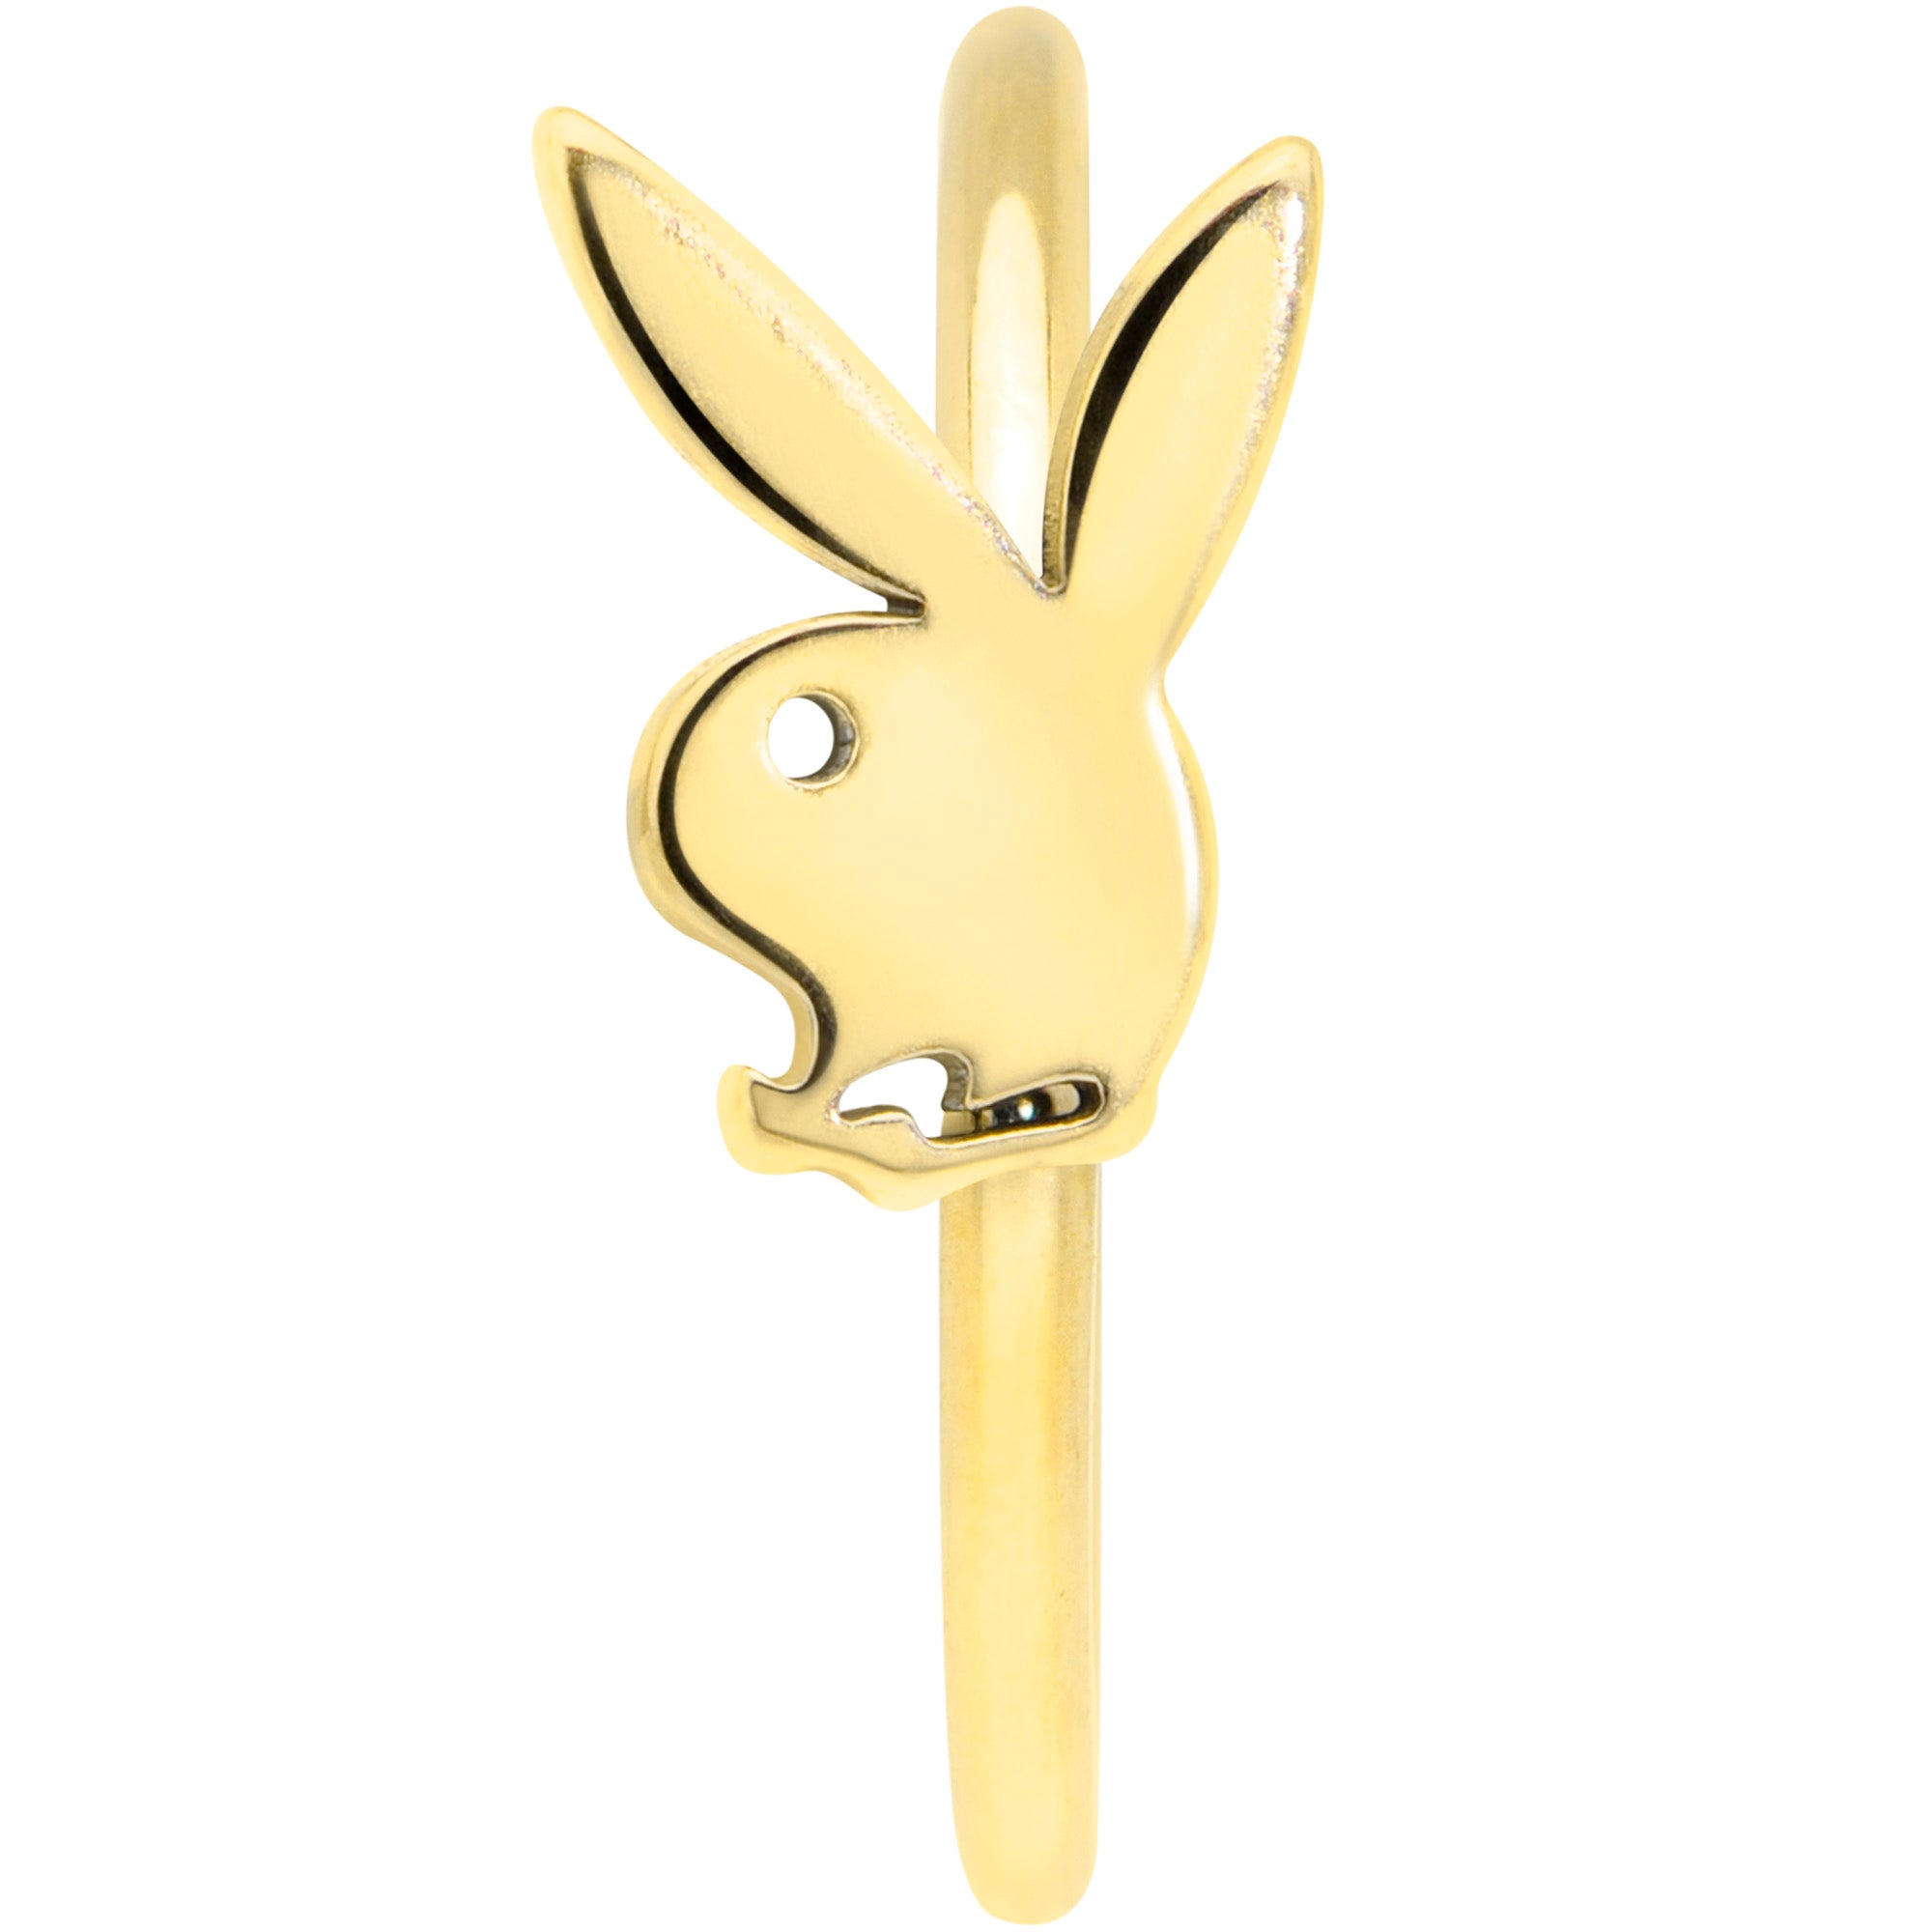 20 Gauge 5/16 Gold Tone Licensed Playboy Bunny Nose Hoop